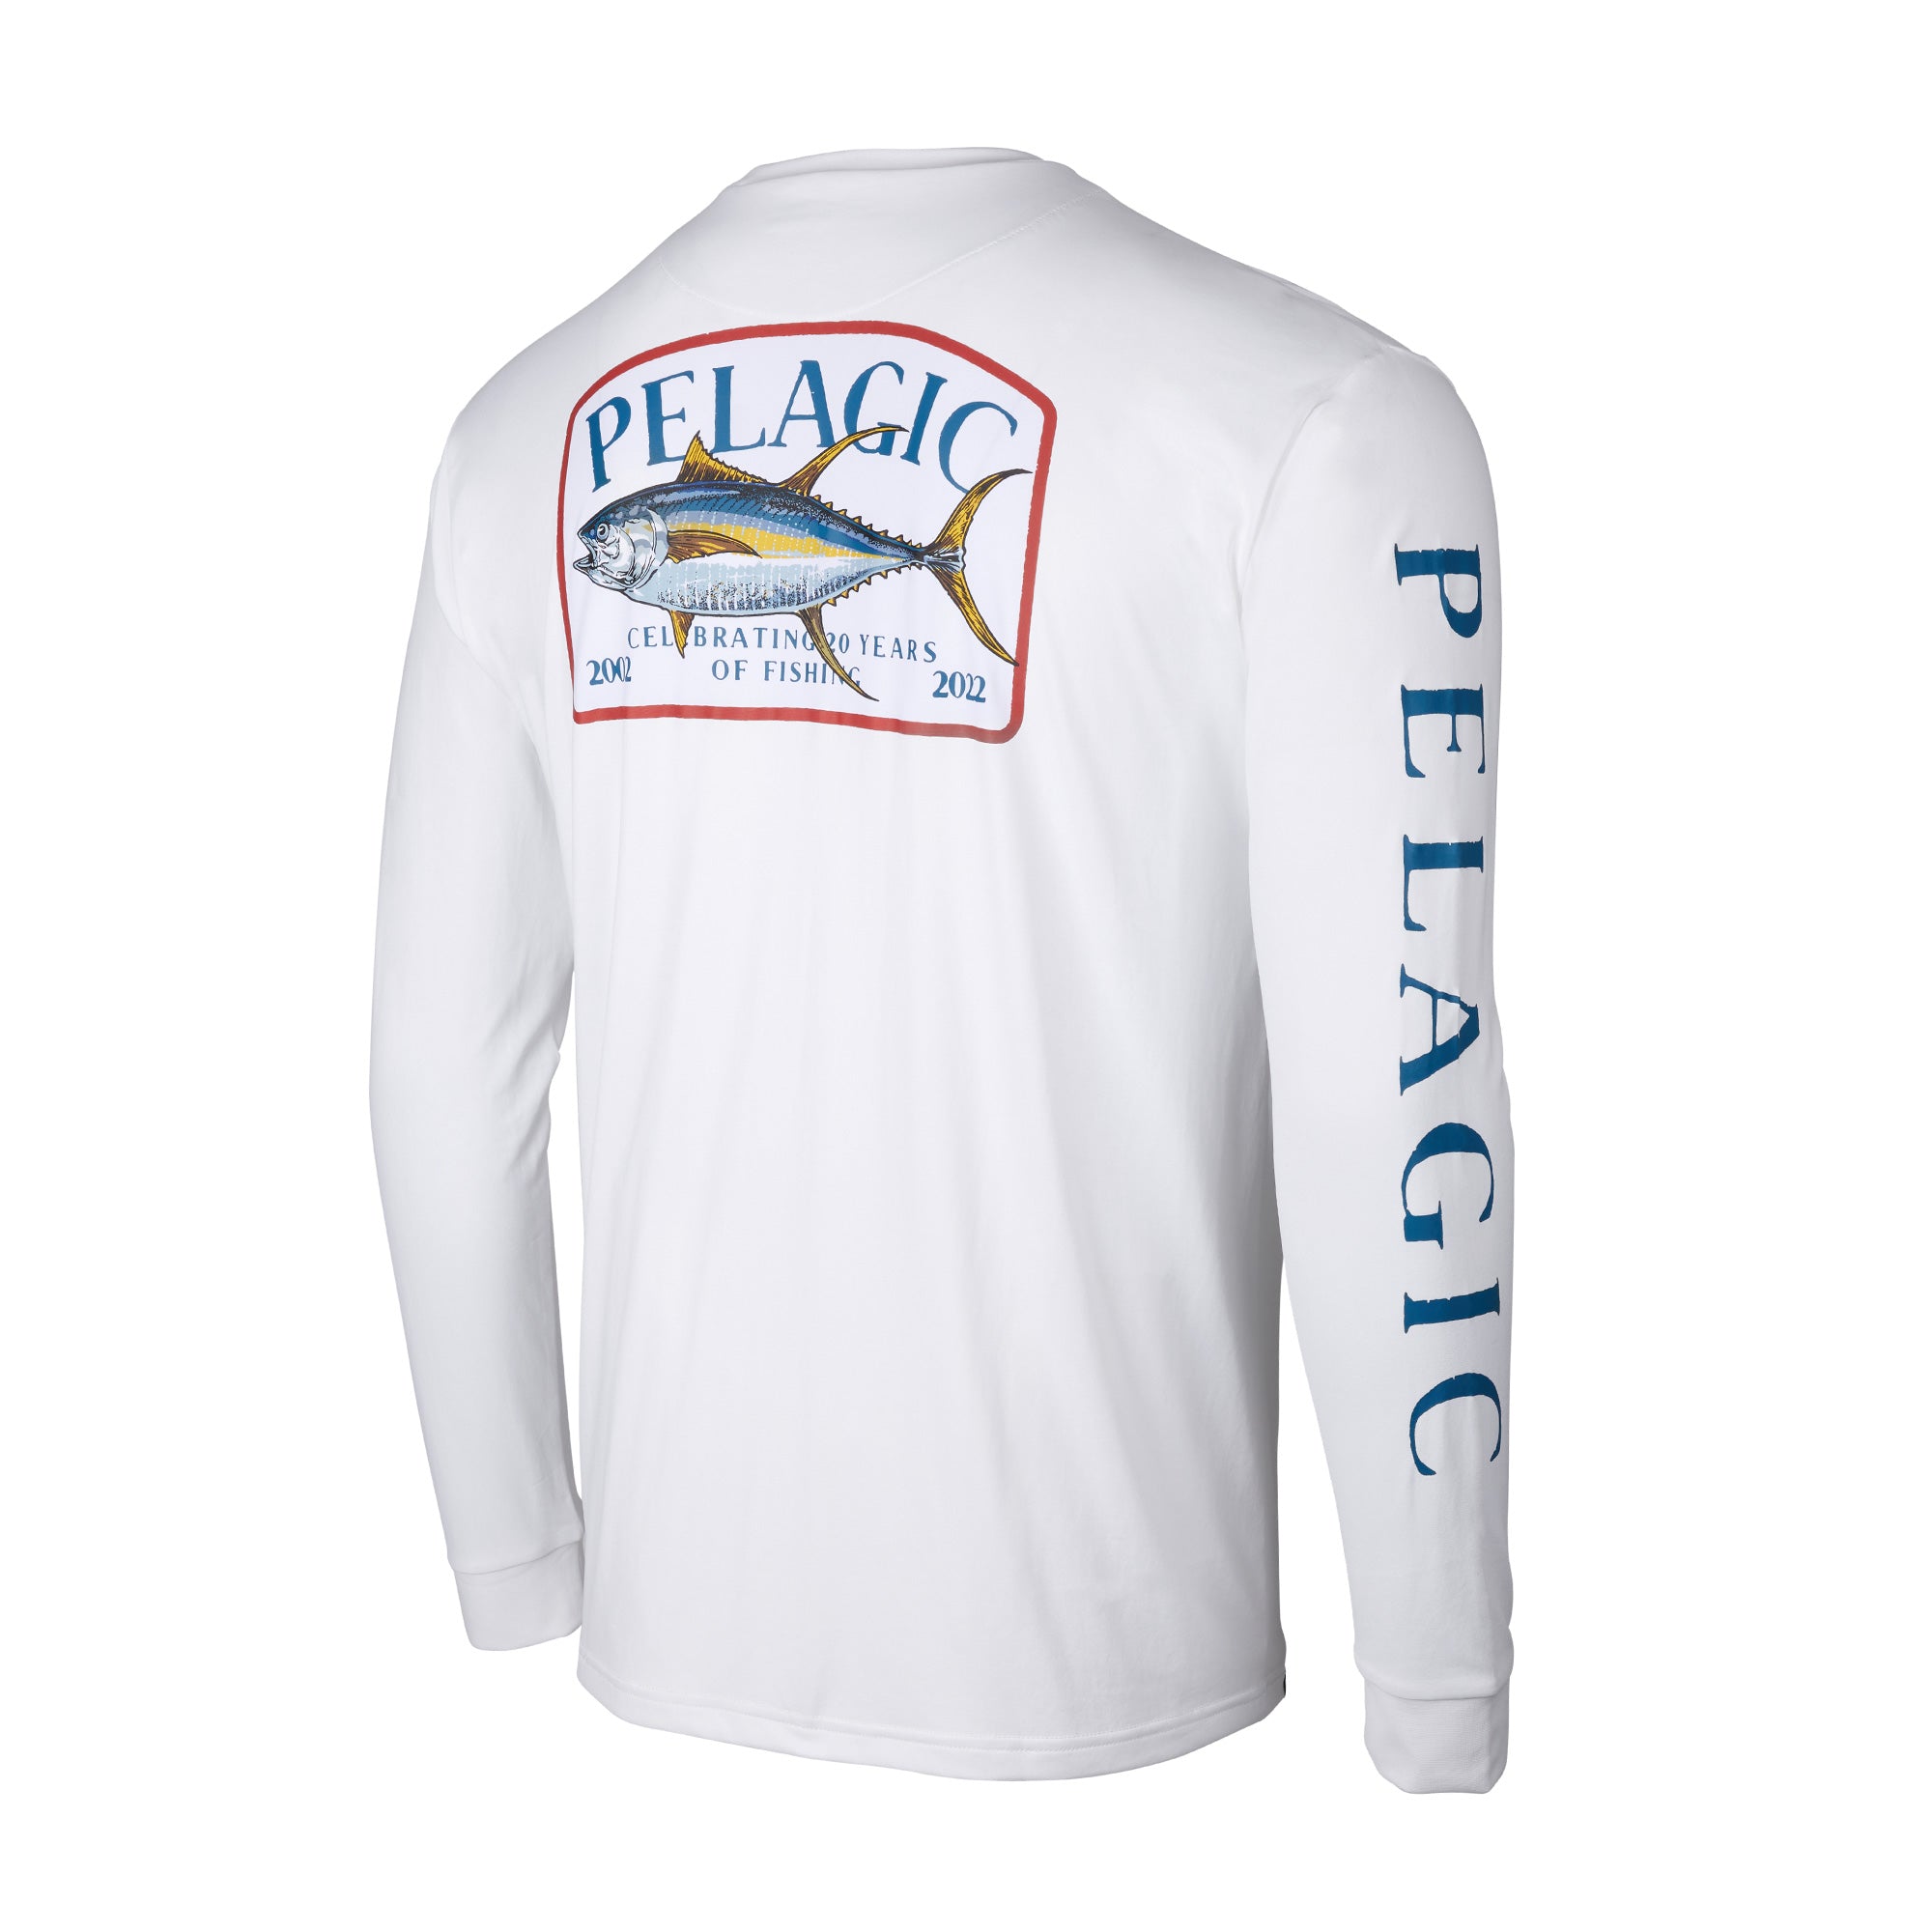 Pelagic Aquatek Game Fish Tuna Fishing Shirt L / White